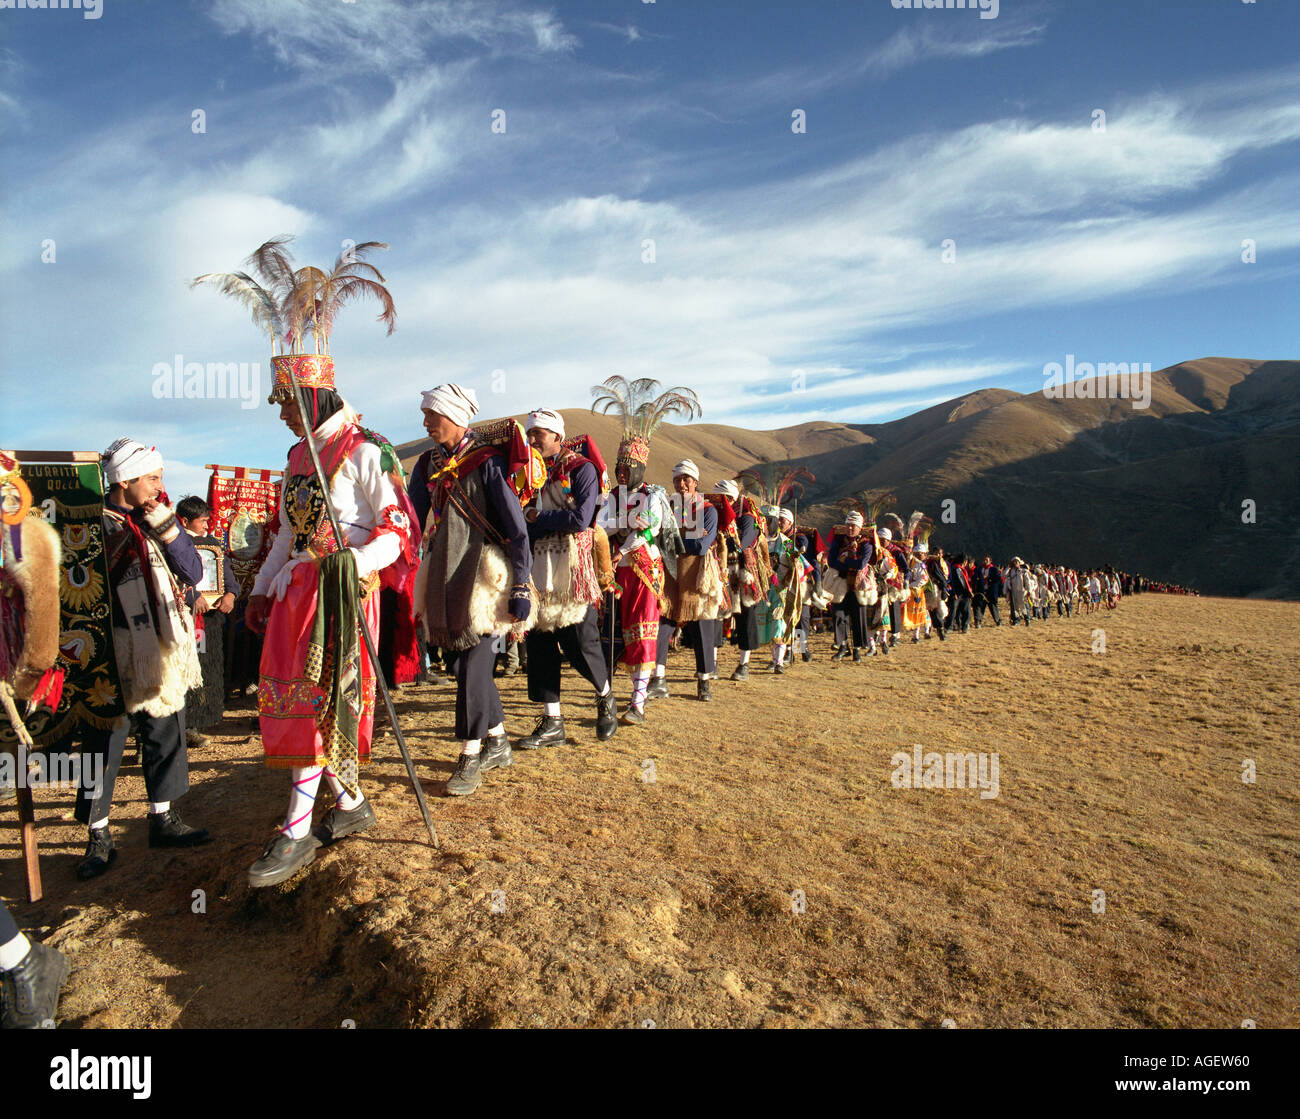 Festival De Qoylluriti in the mountains of Peru, South America Stock Photo